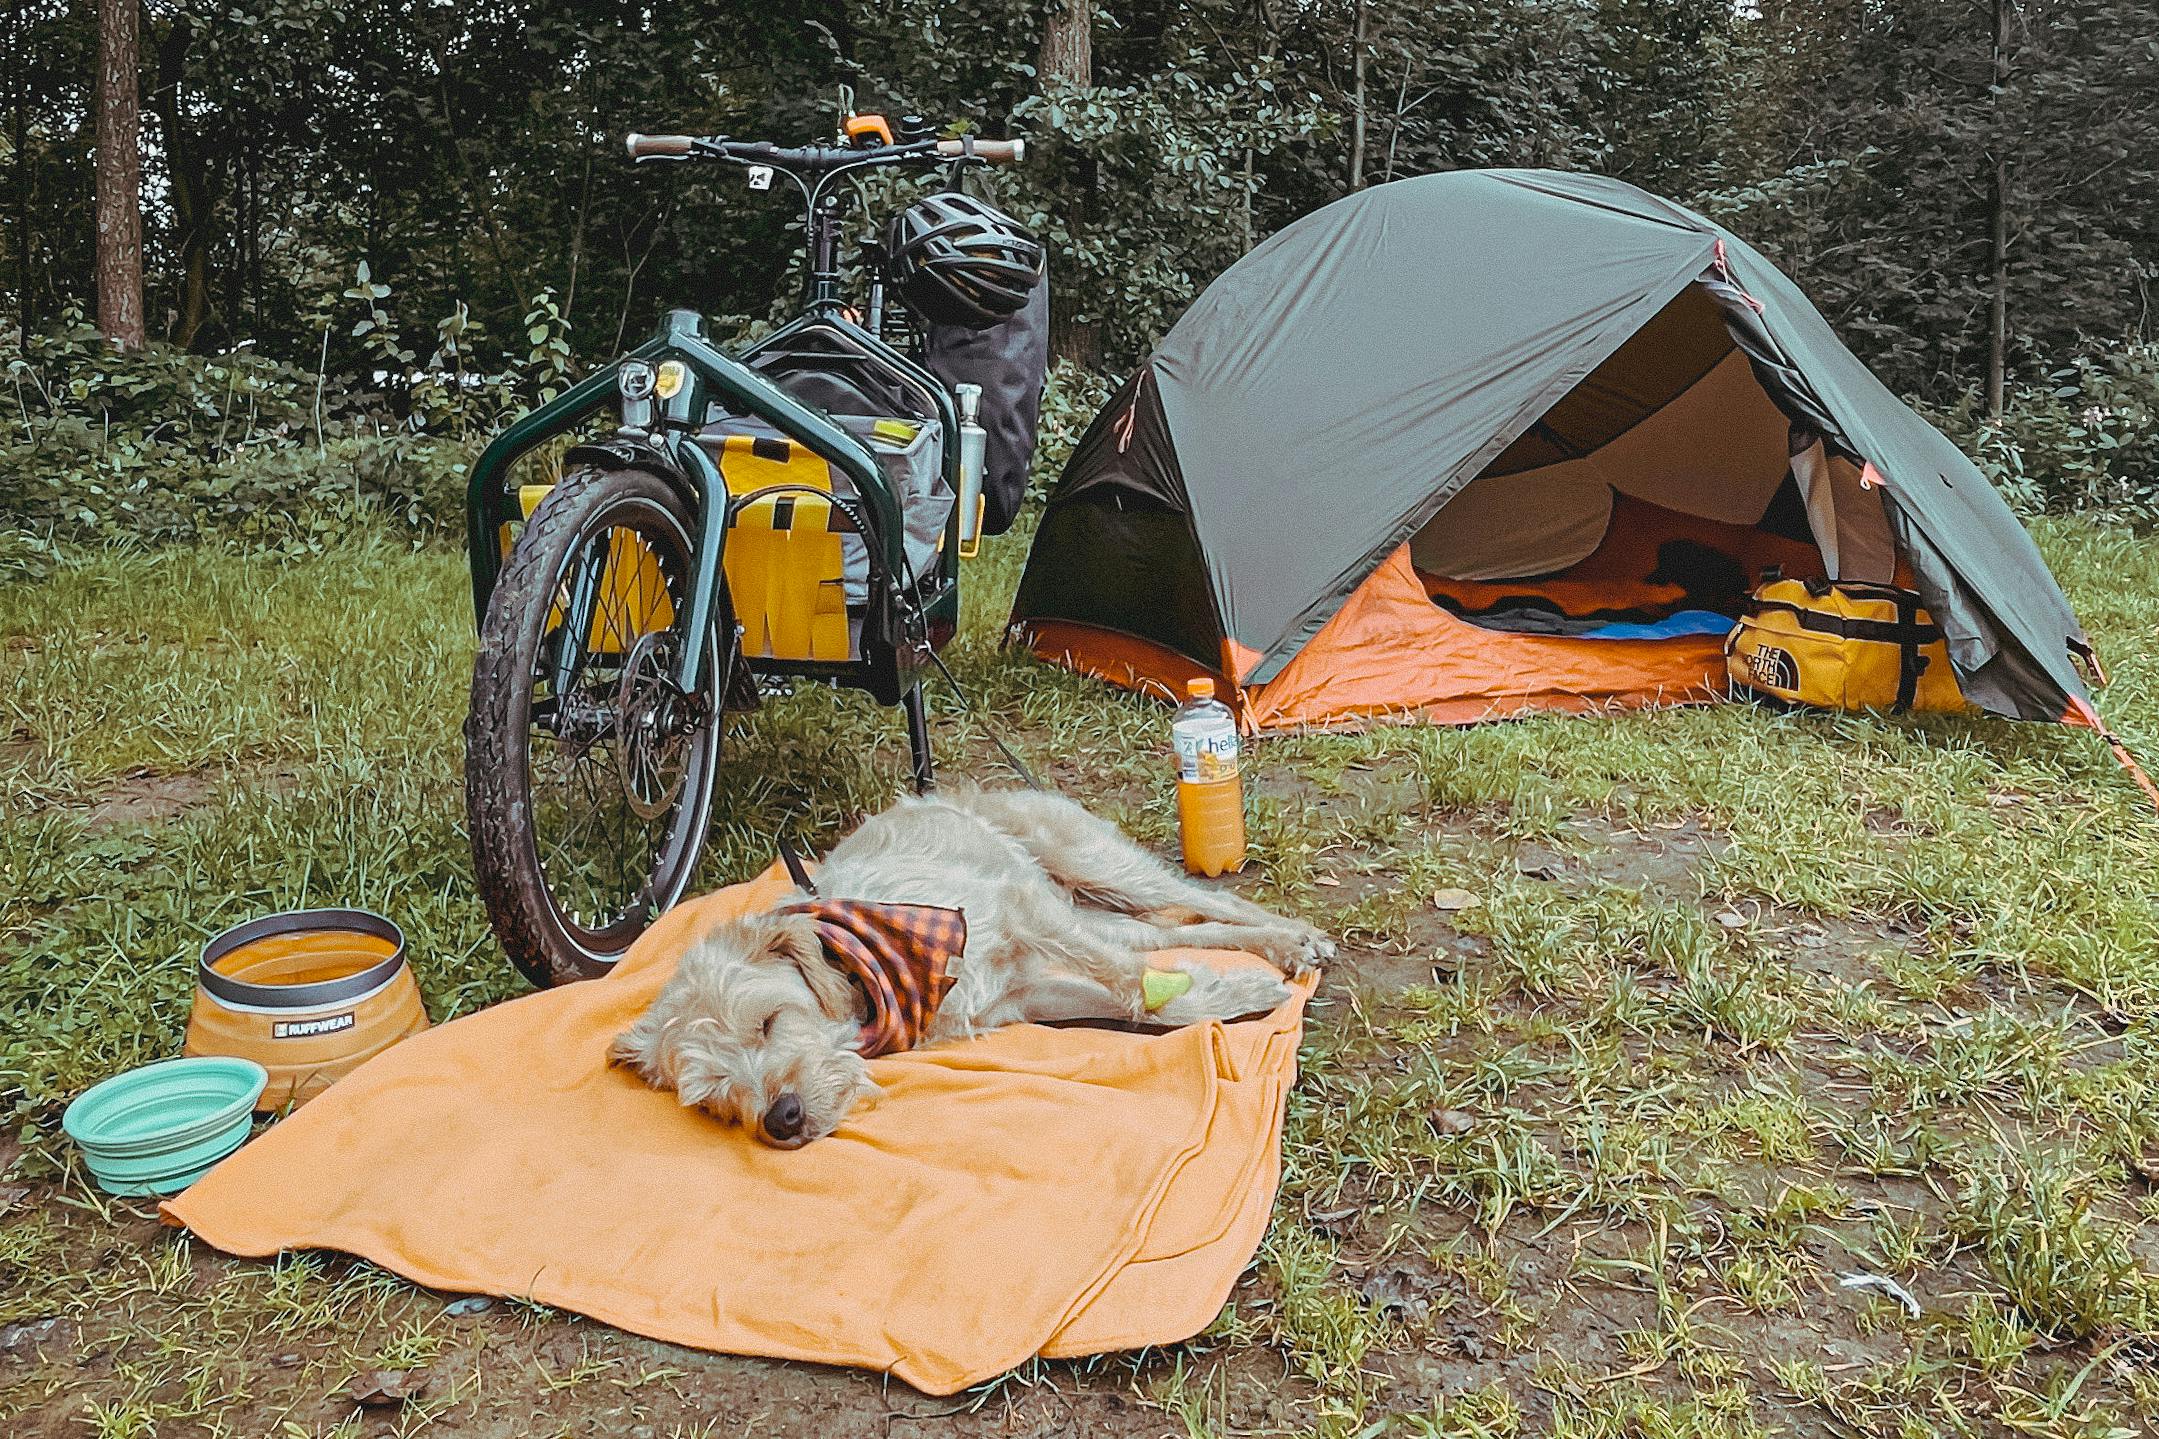 A cargo bikepacking setup next to a sleeping dog.